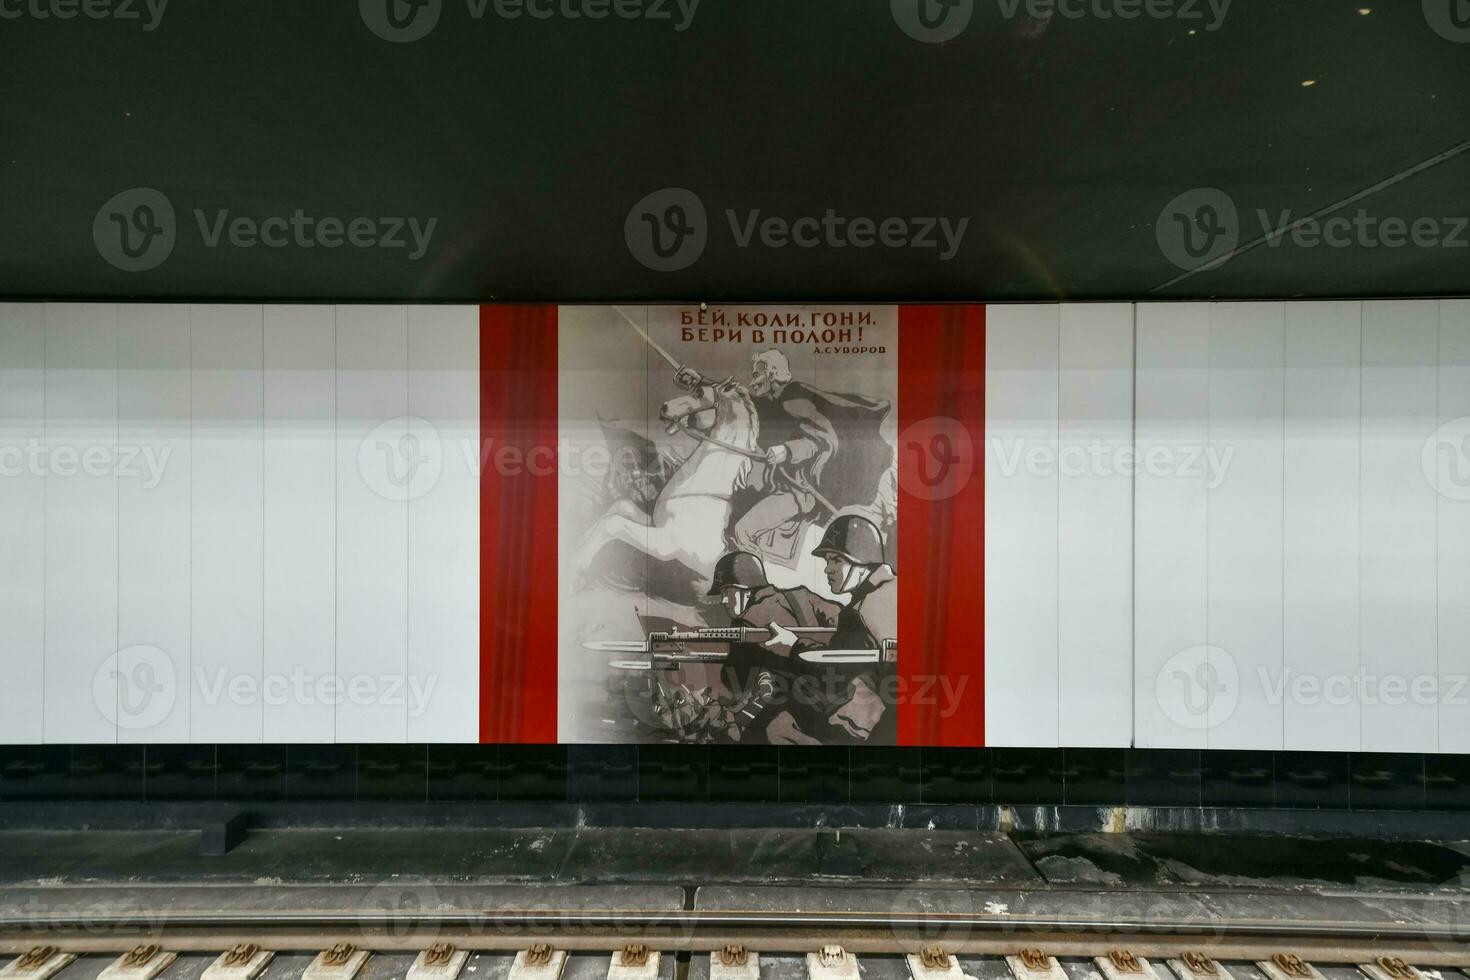 narodnoye opolcheniye metro estação - Moscou, Rússia foto